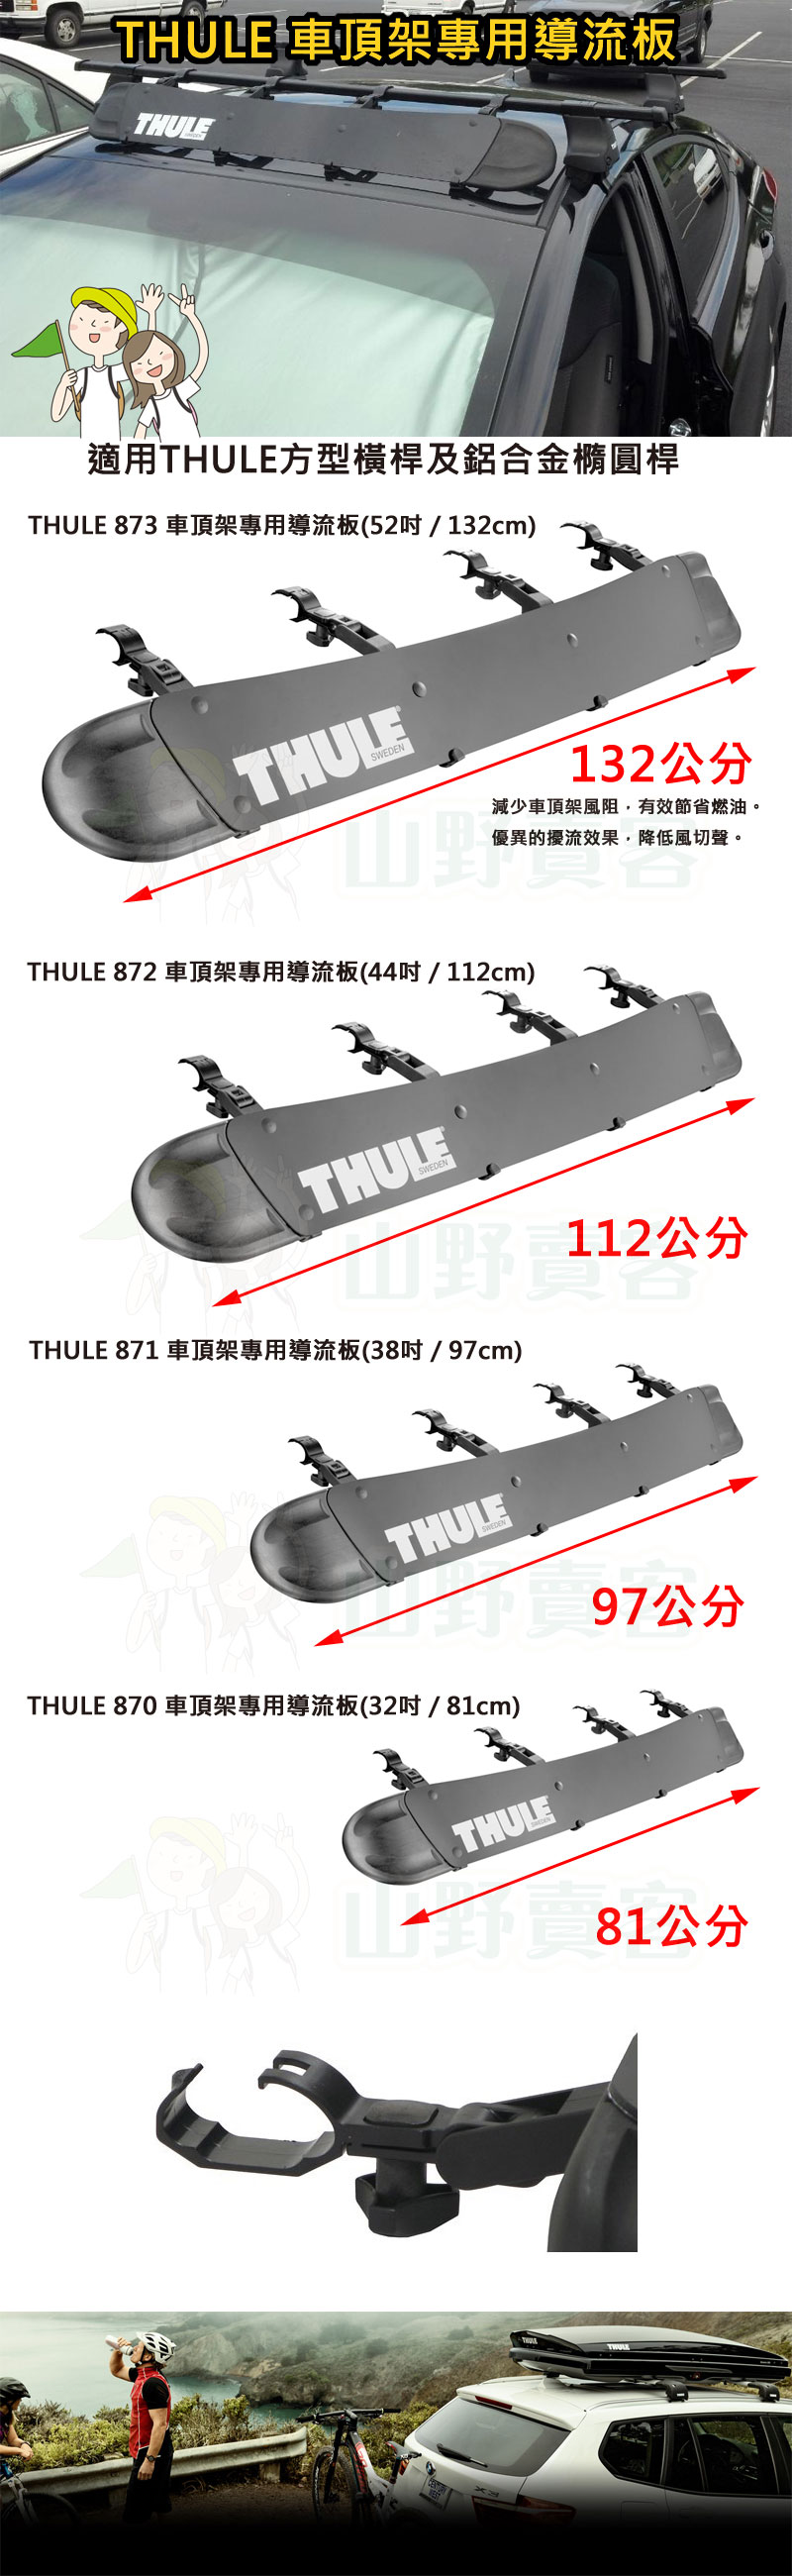 Thule 872 都樂 USA-872XT 44吋 112cm 擾流板